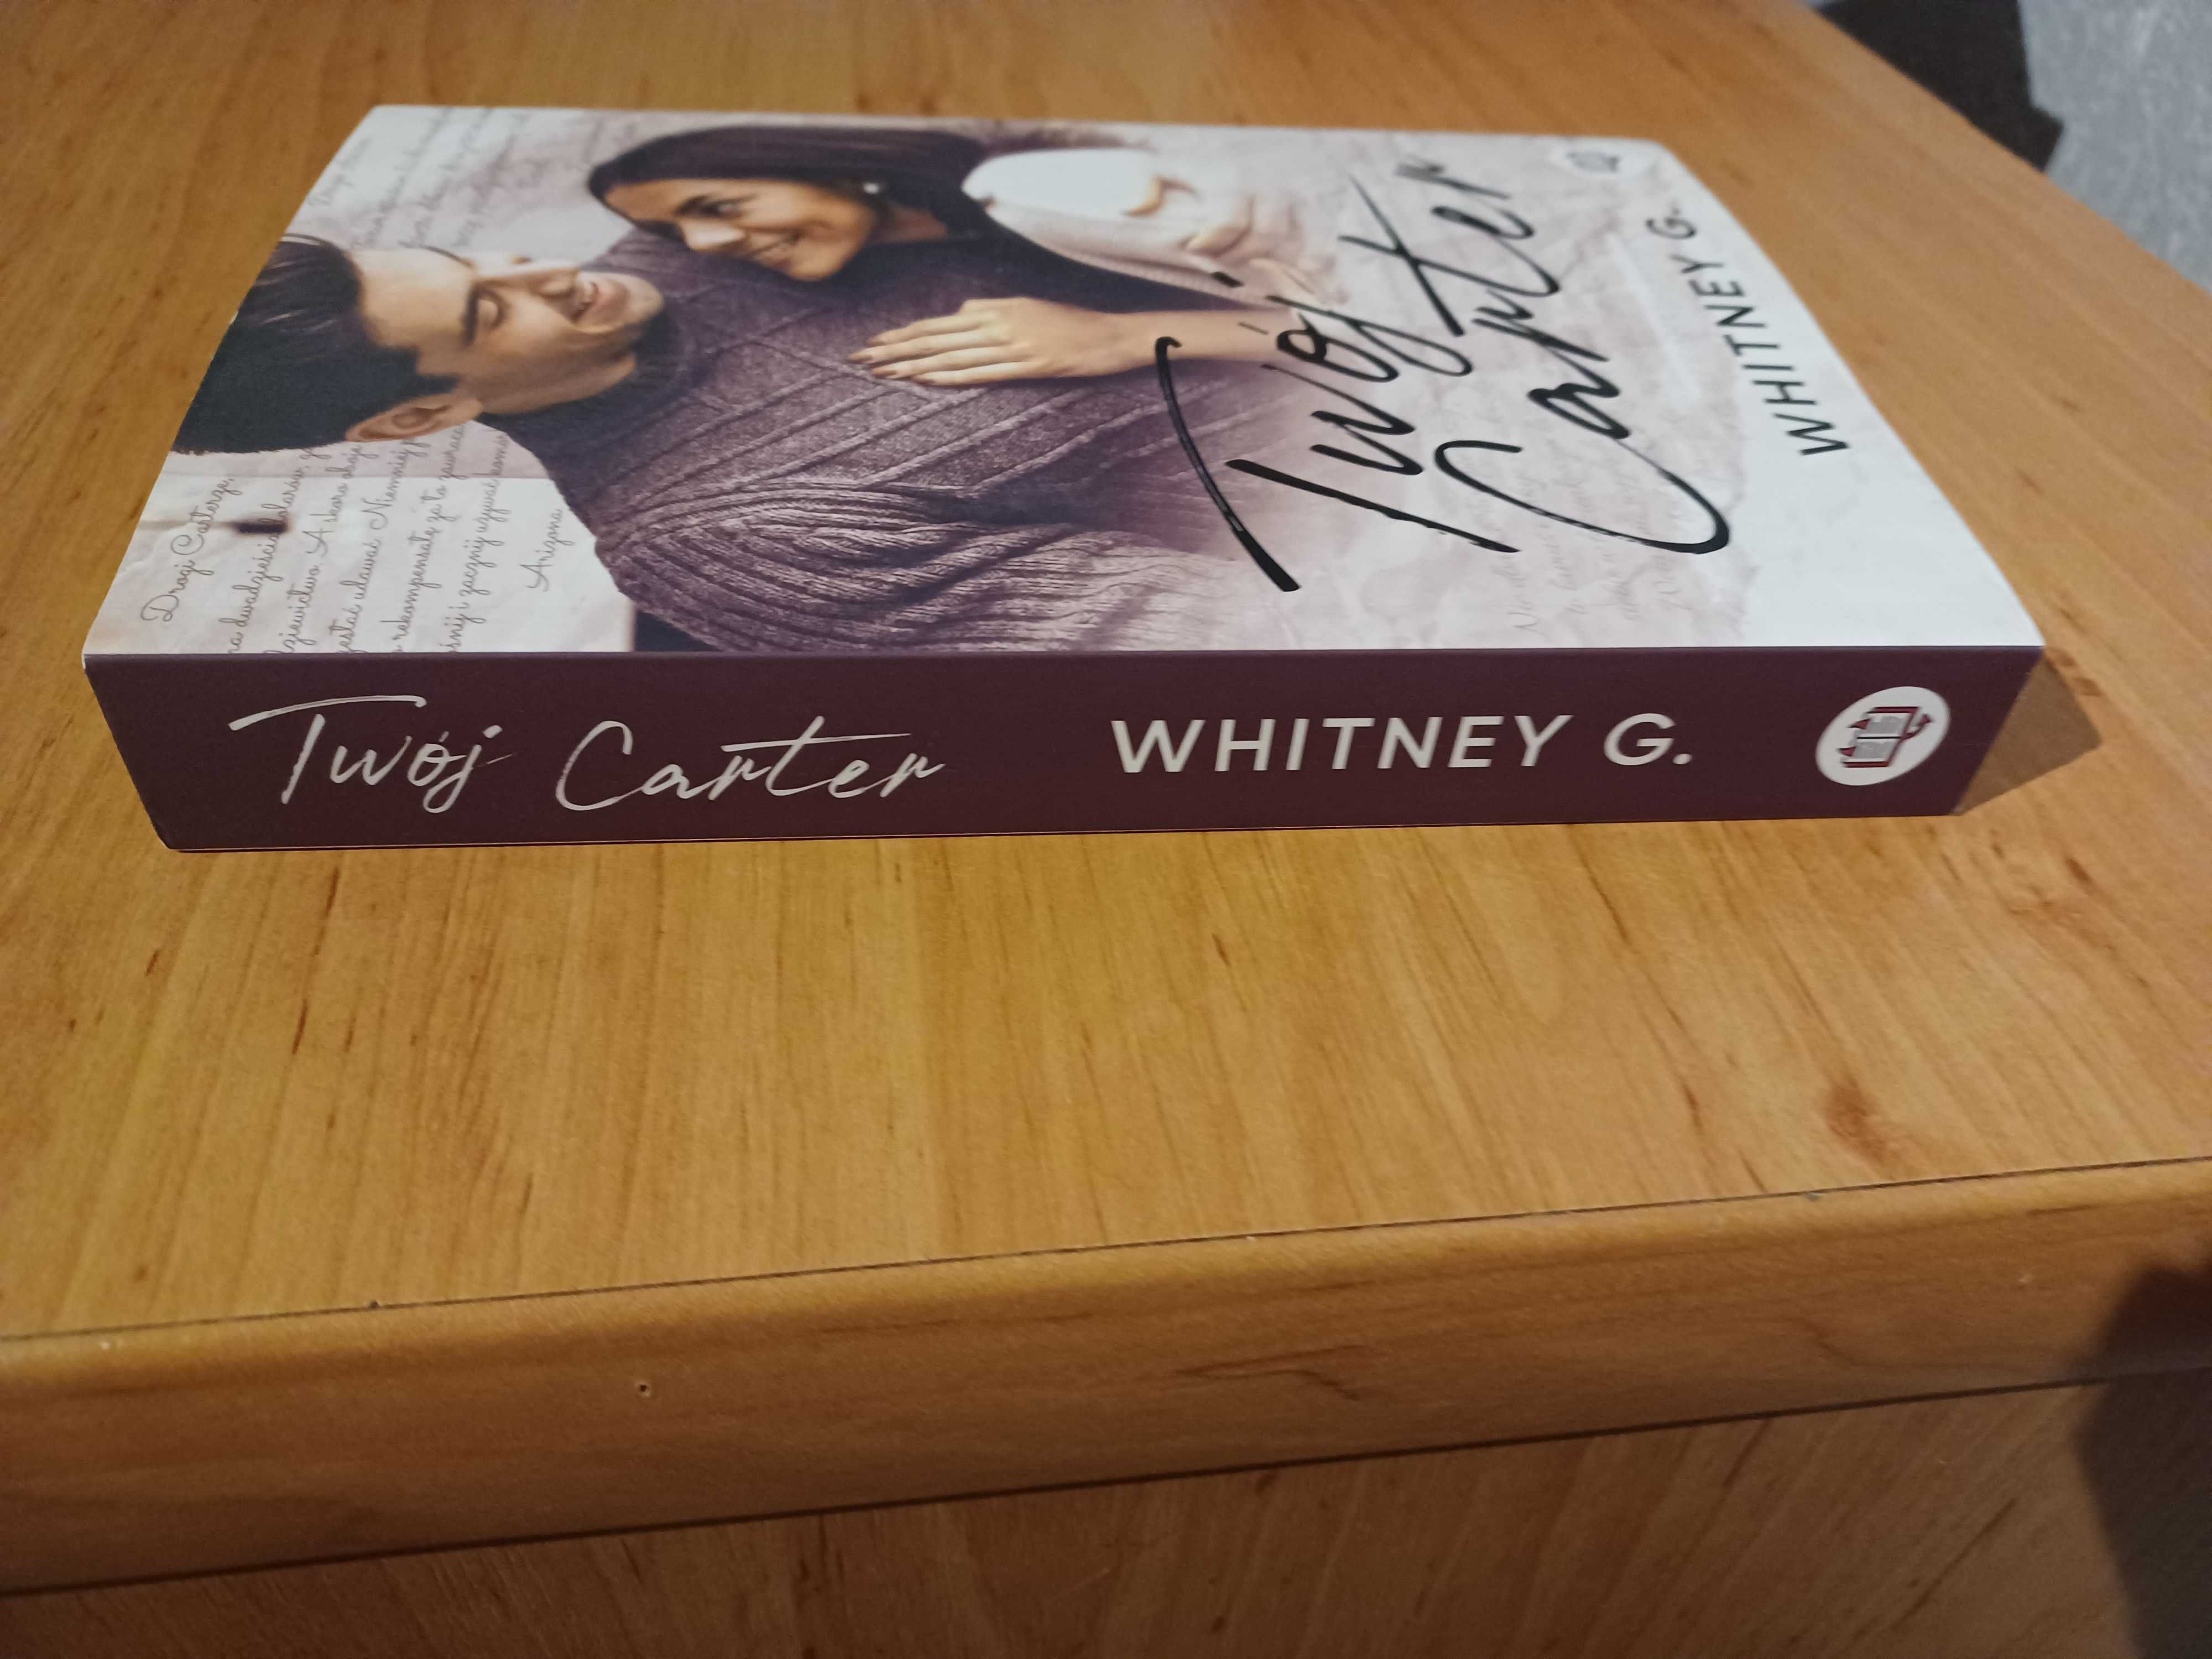 Whitney G. "Twój Carter"